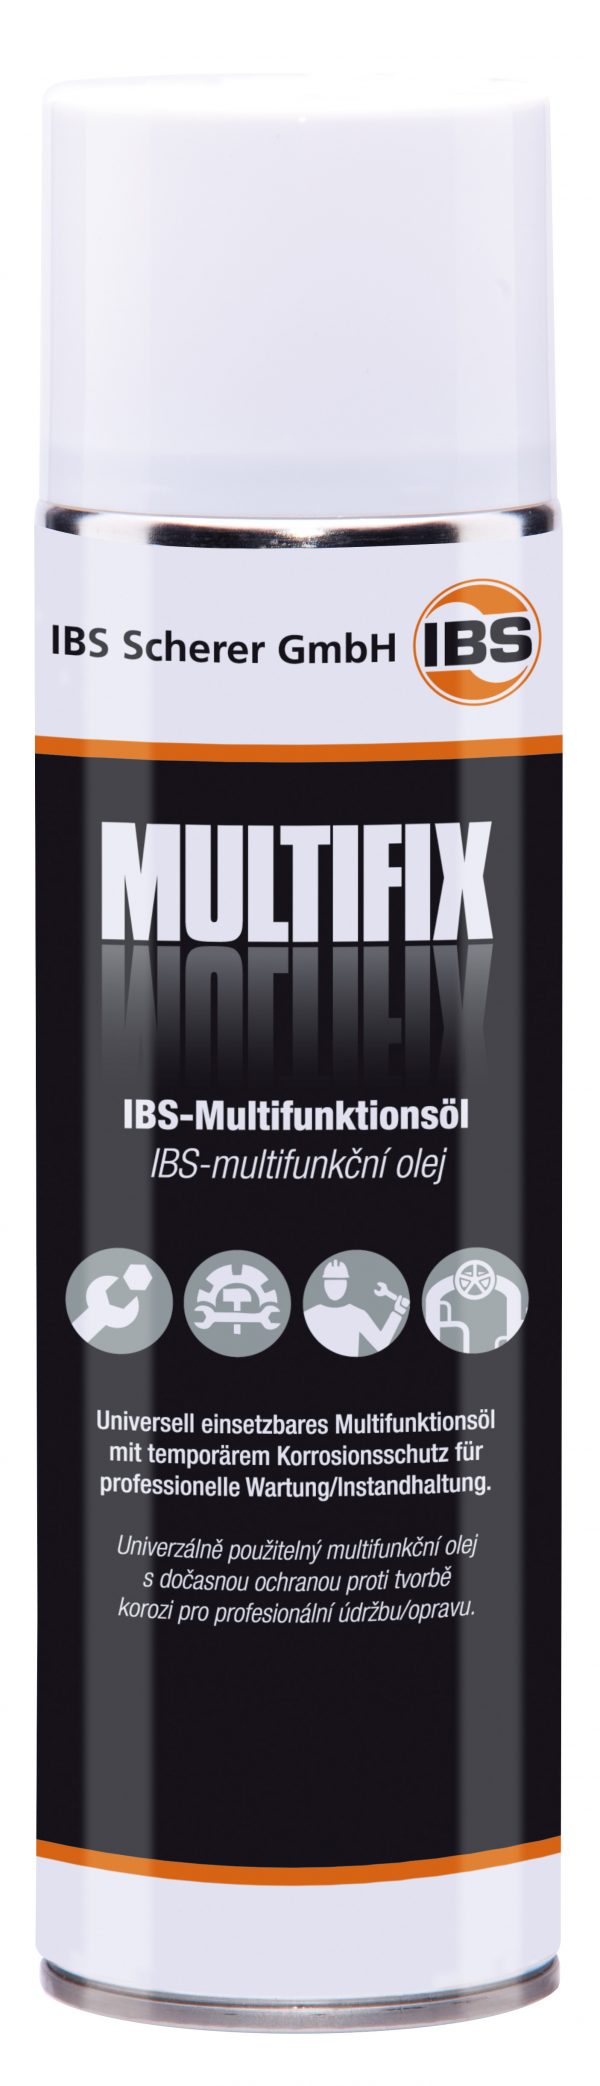 IBS-Multifunkční olej MultiFix